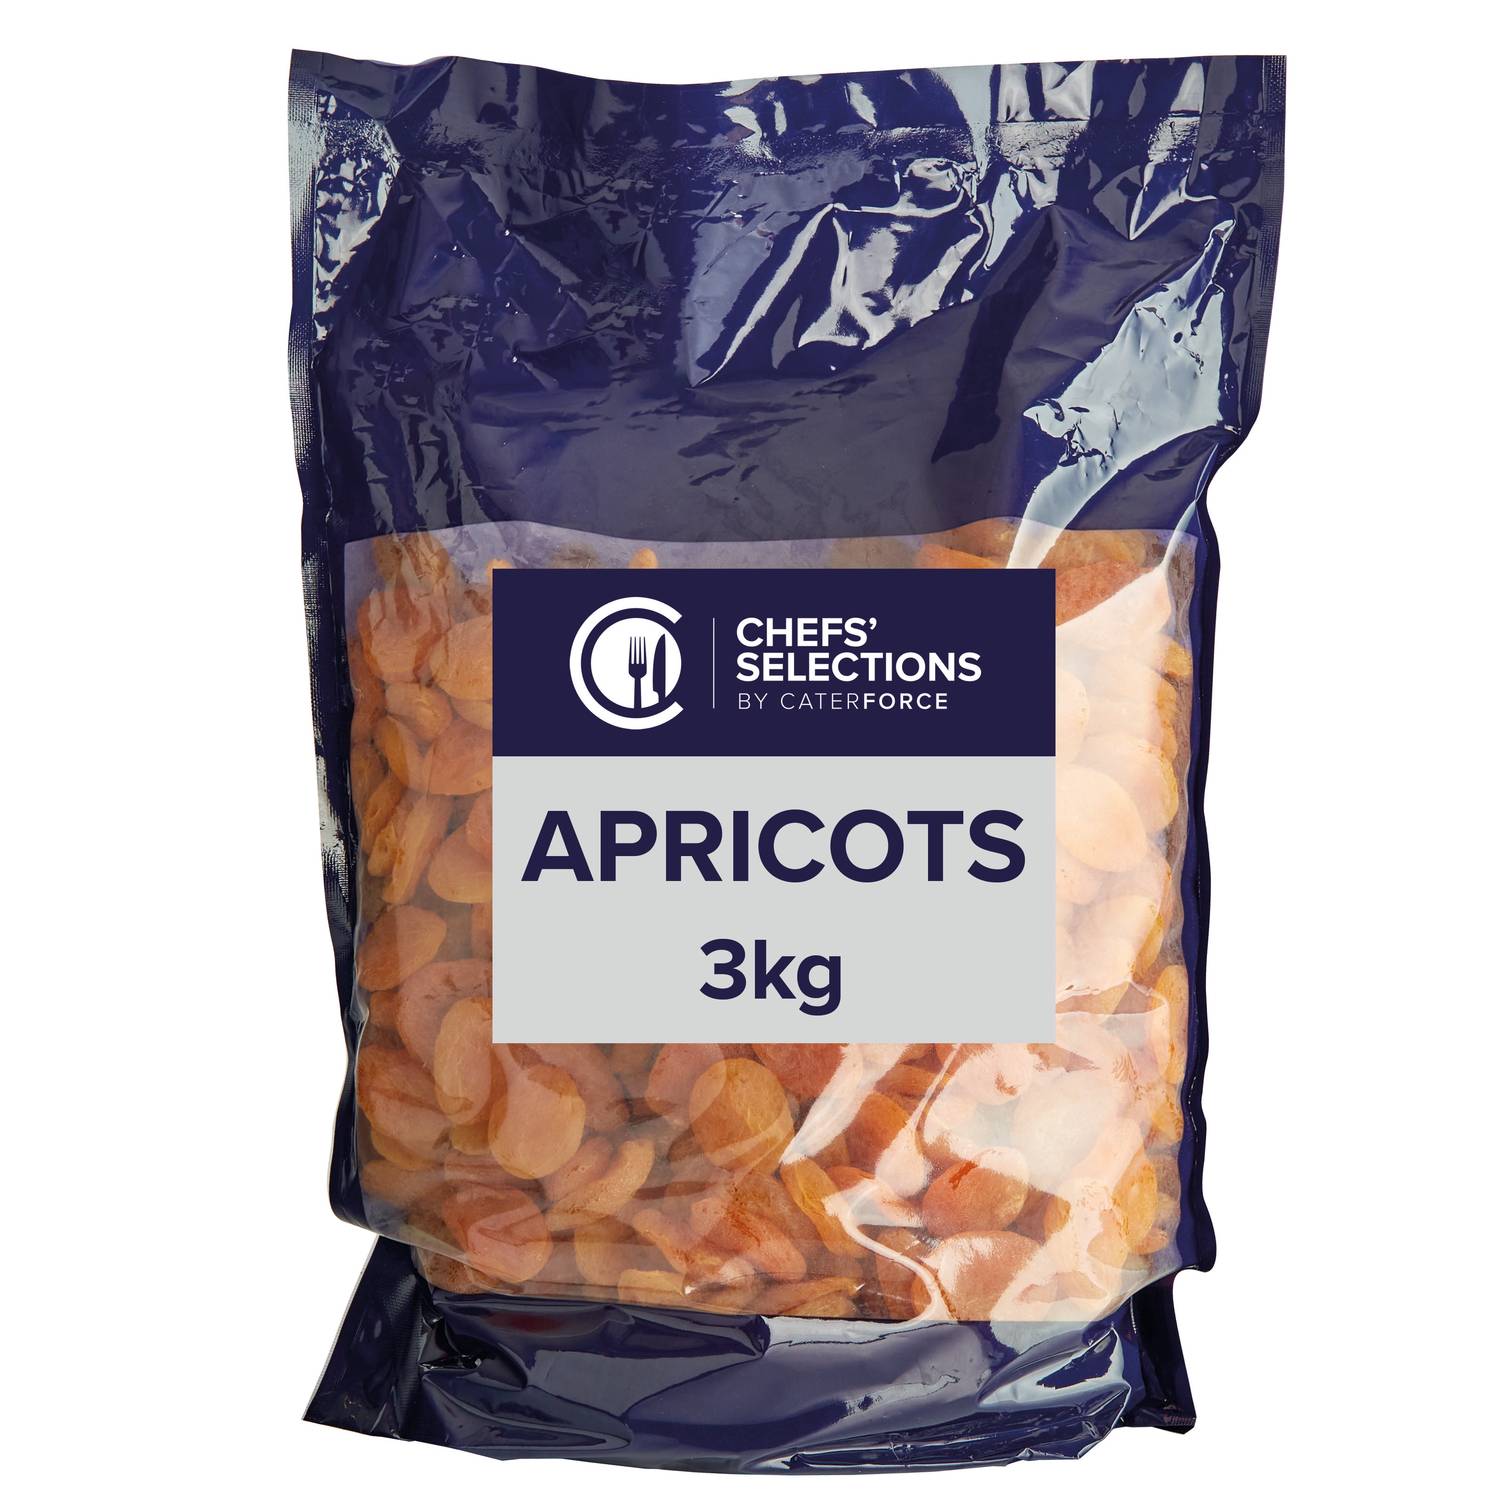 Chefs’ Selections Apricots (4 x 3kg)